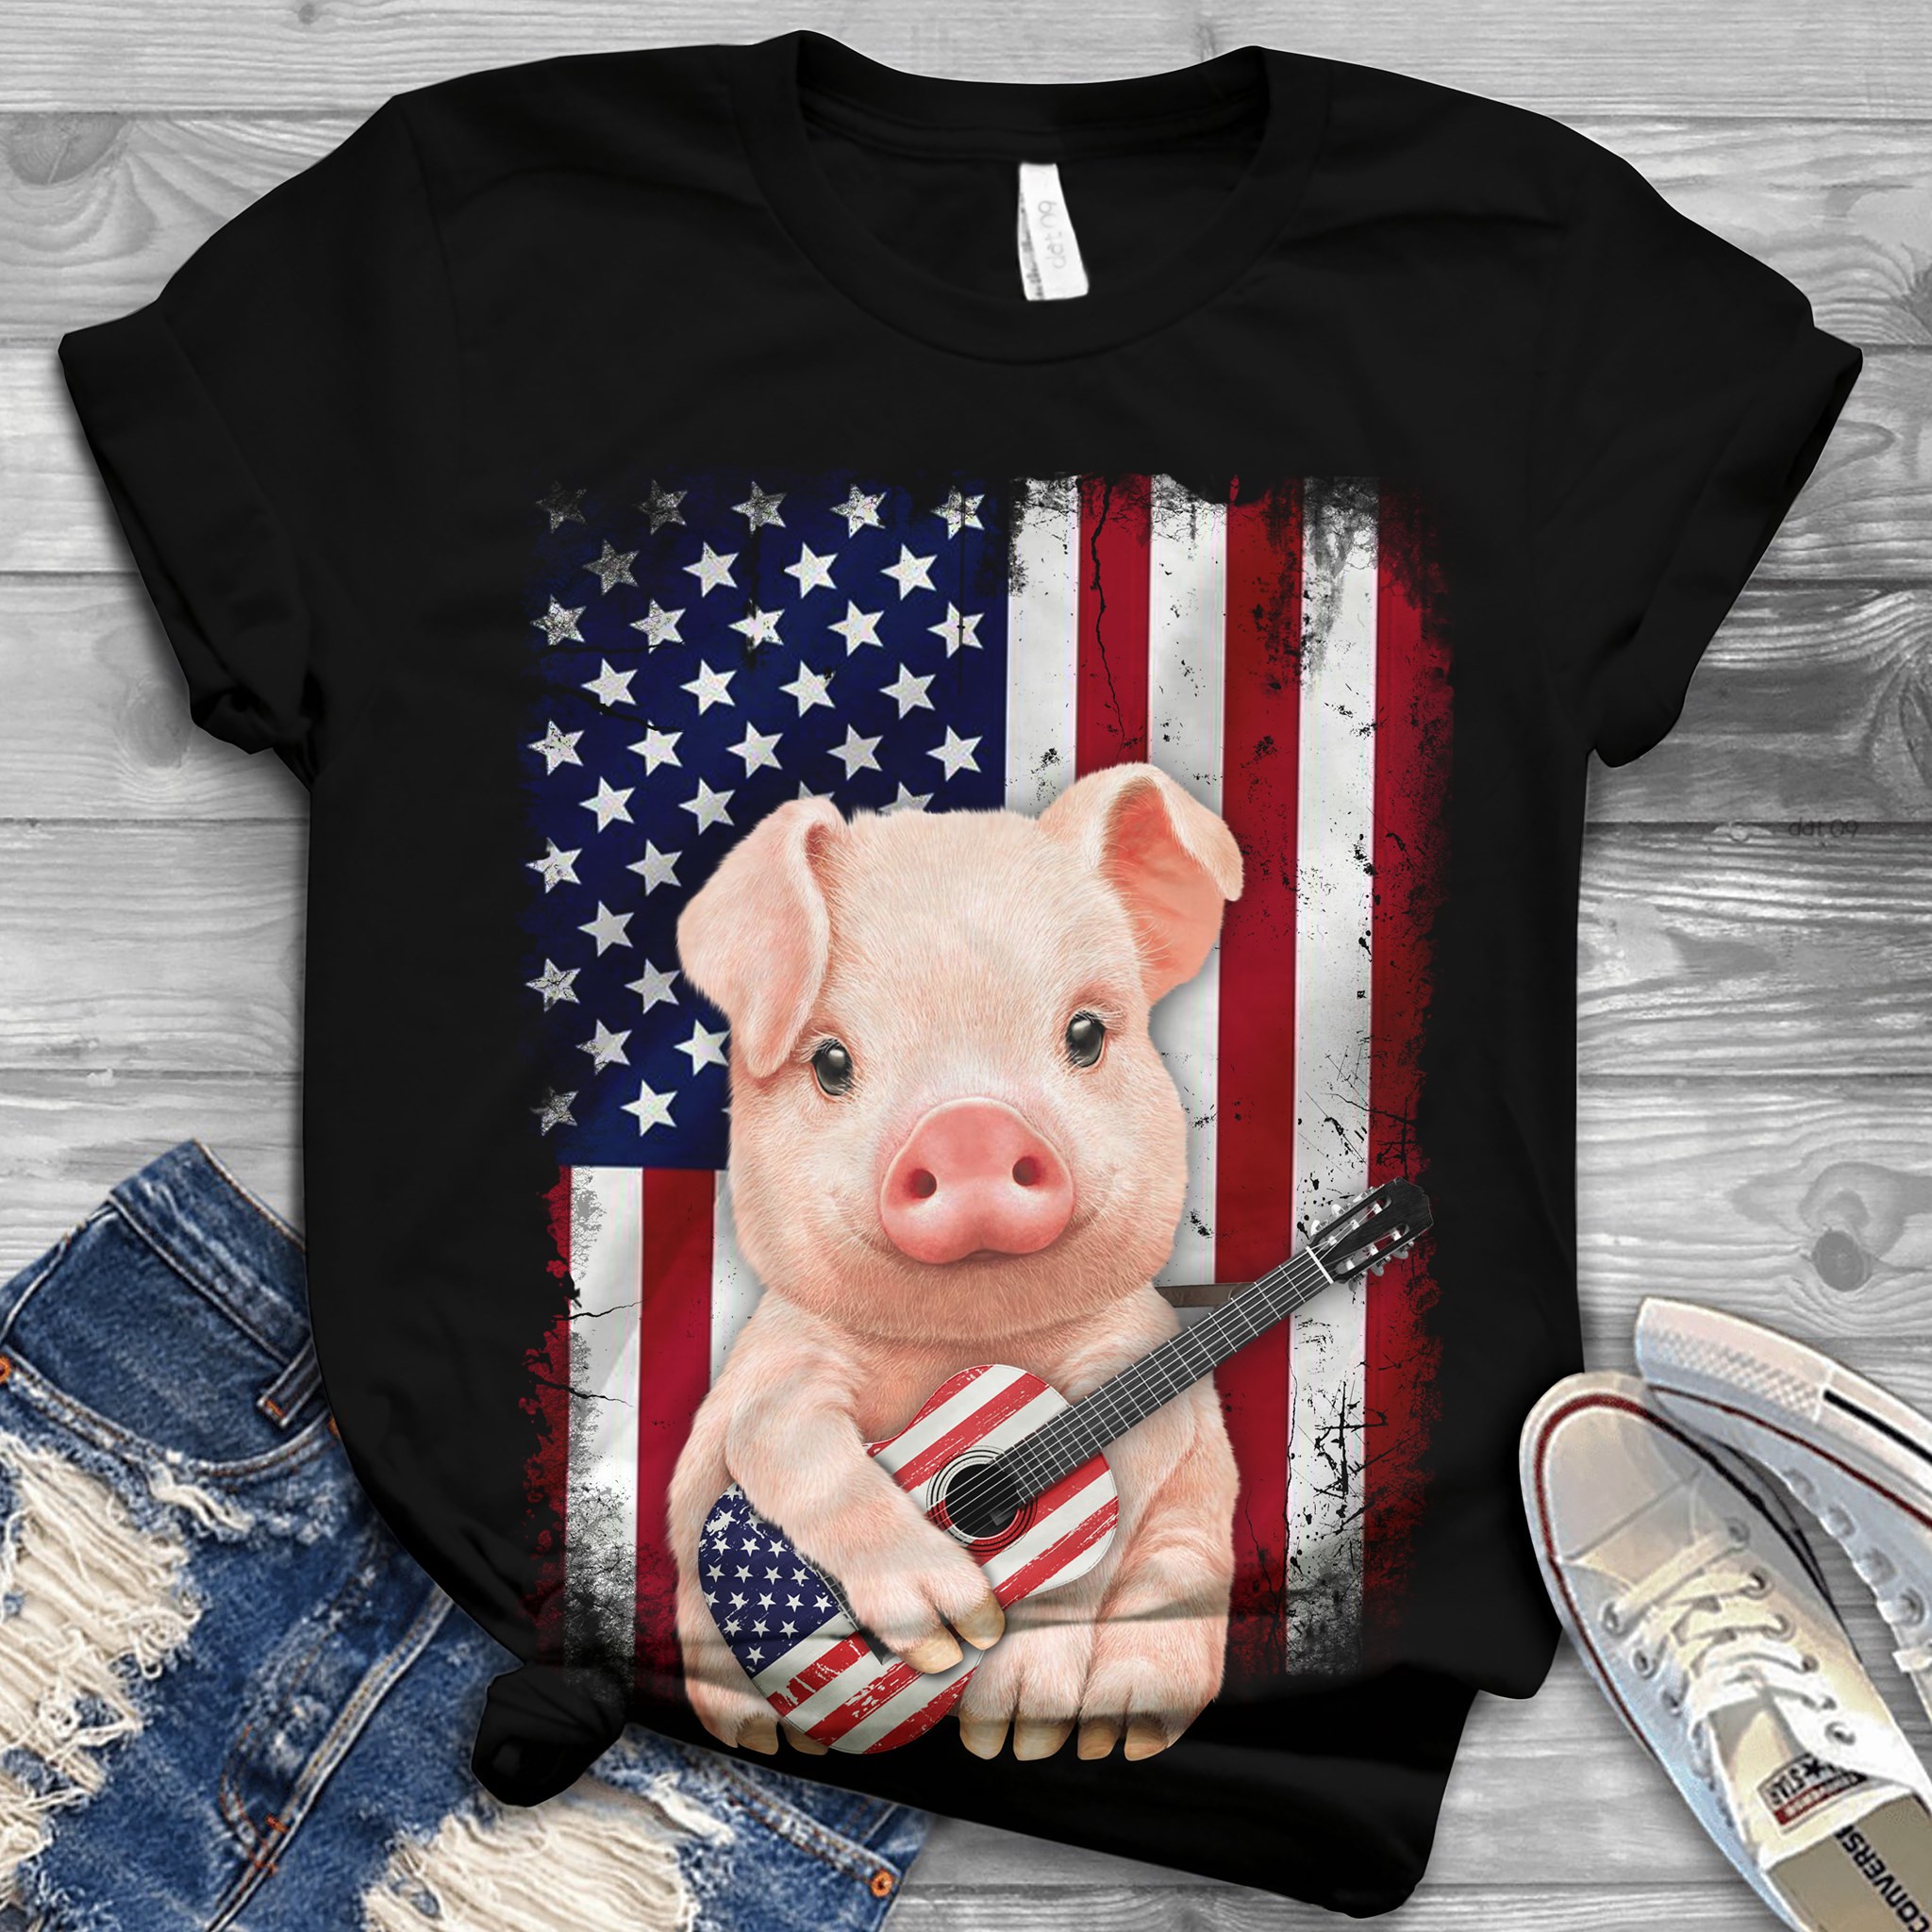 Pig playing guitar - Pig lover, America flag